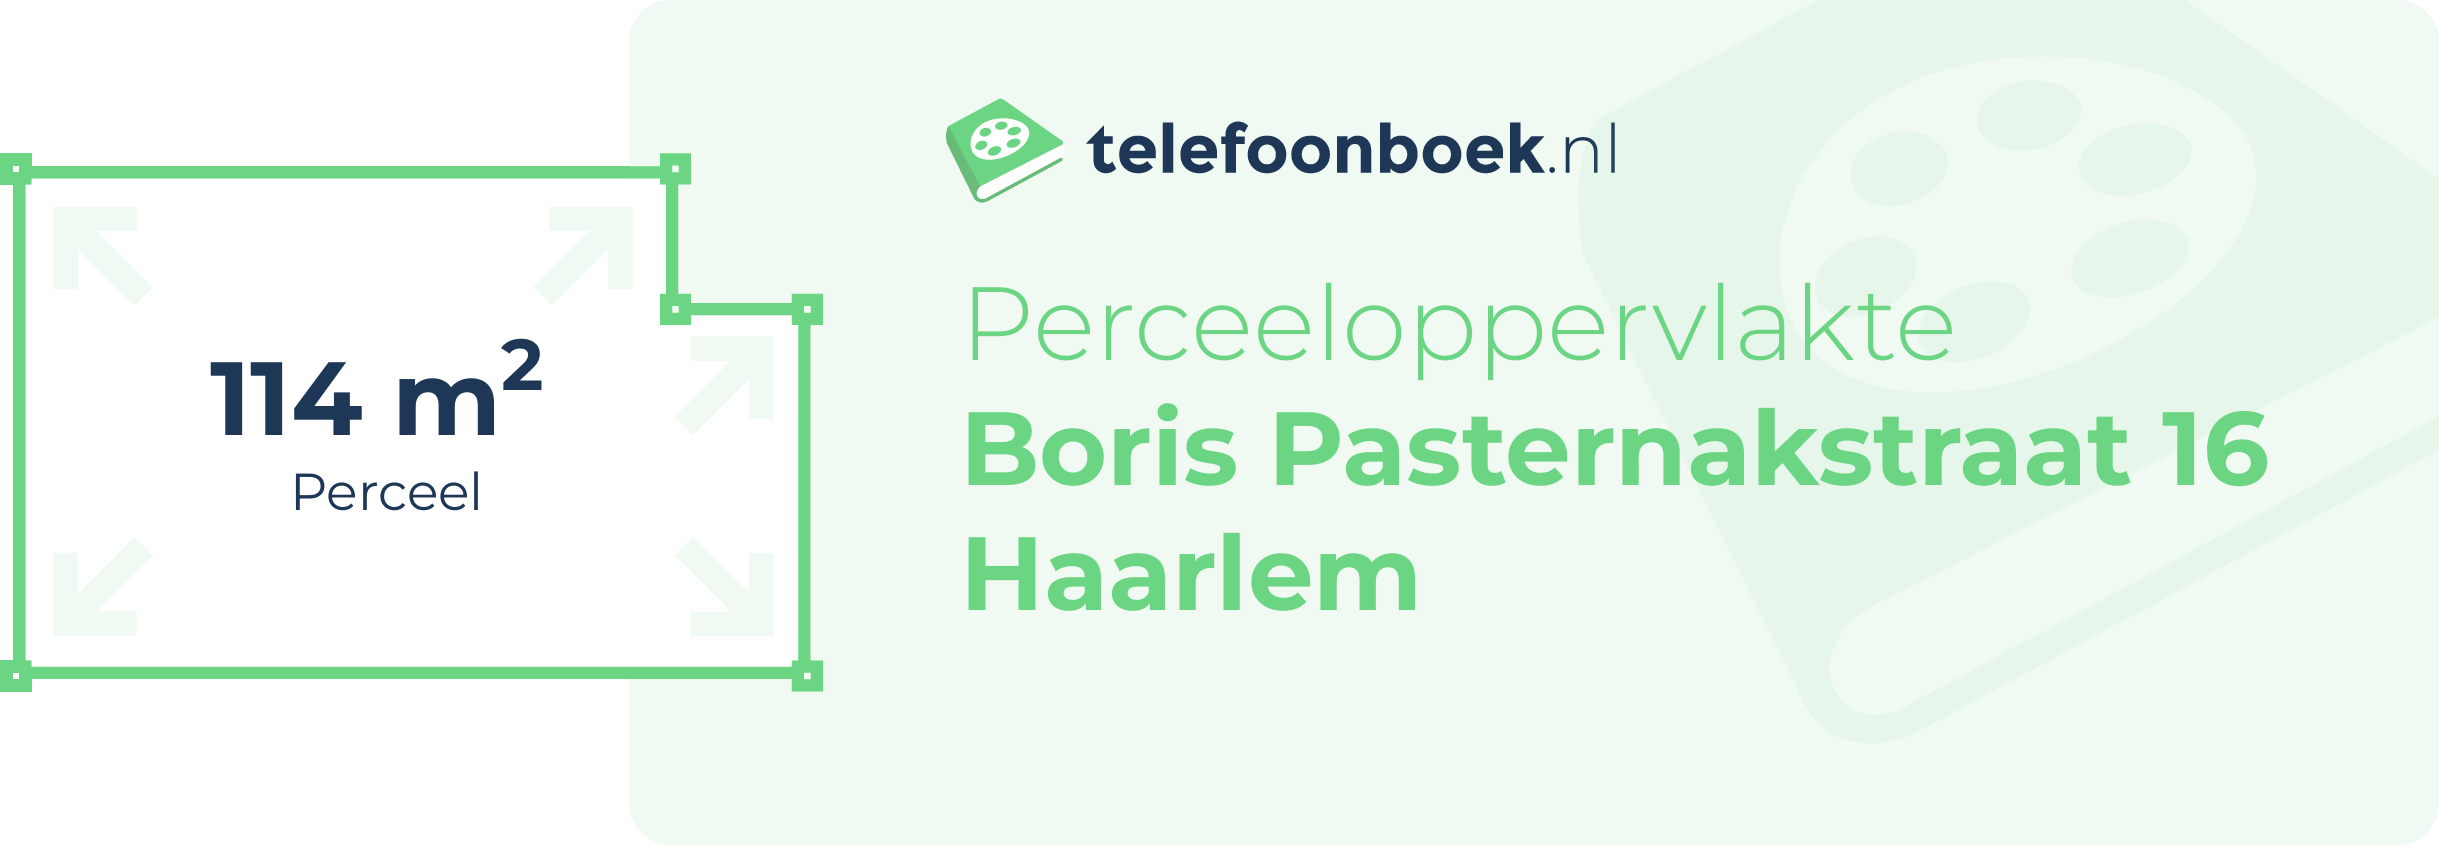 Perceeloppervlakte Boris Pasternakstraat 16 Haarlem